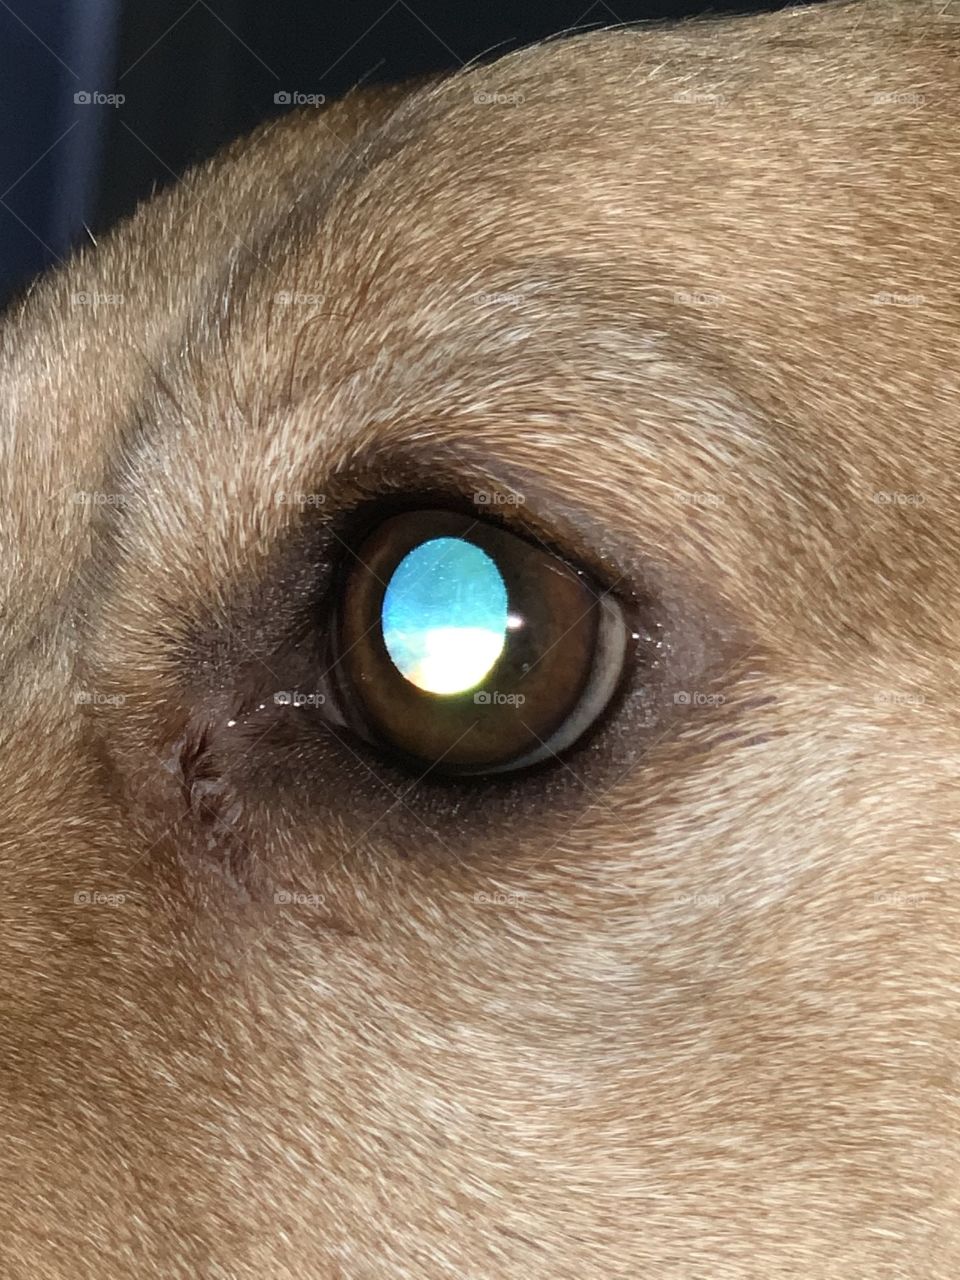 beautiful image in my dog’s brown eye